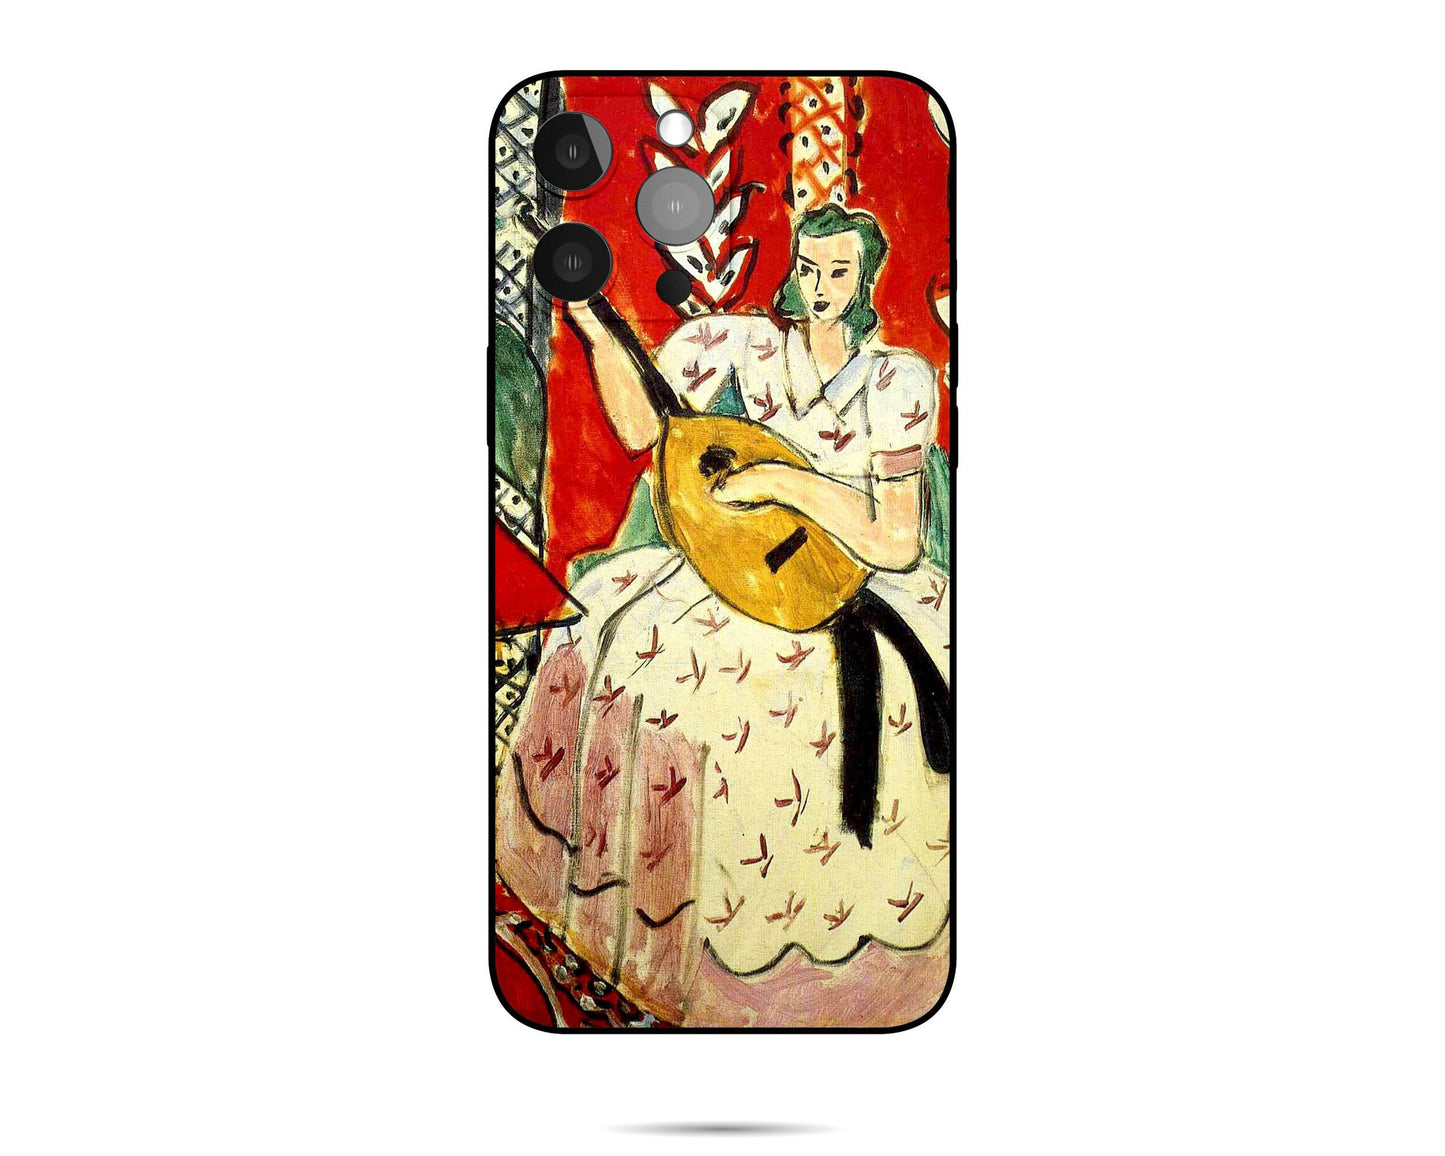 Henri Matisse Art Iphone 14 Pro Max Case, Iphone 13, Iphone X, Iphone 8 Plus Case Art, Aesthetic Phone Case, Birthday Gift, Silicone Case